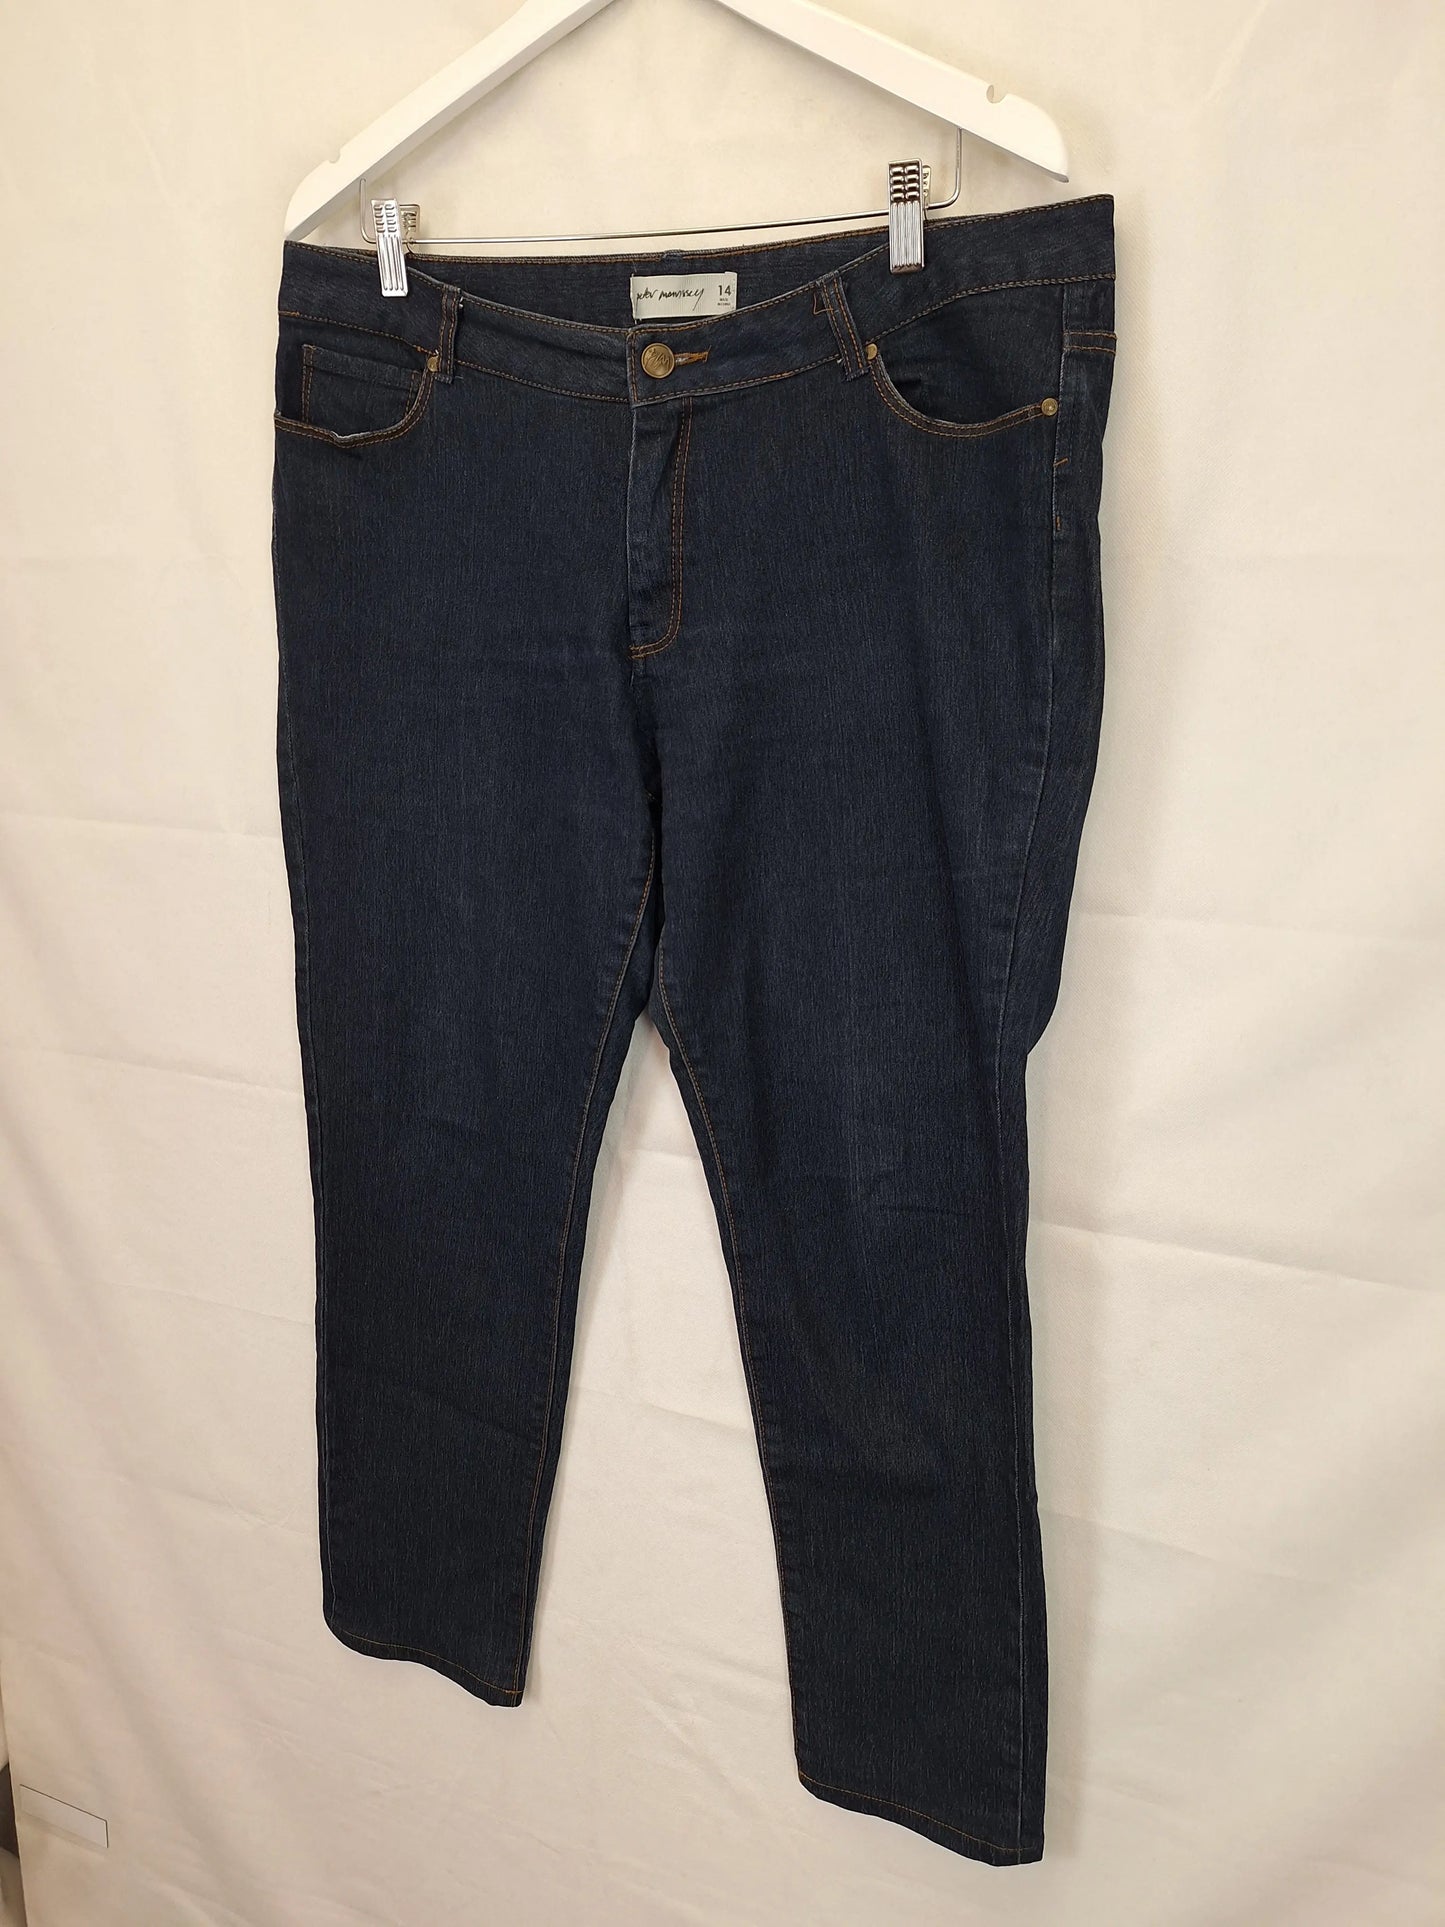 Peter Morrissey Dark Denim Industrial Jeans Size 14 by SwapUp-Online Second Hand Store-Online Thrift Store